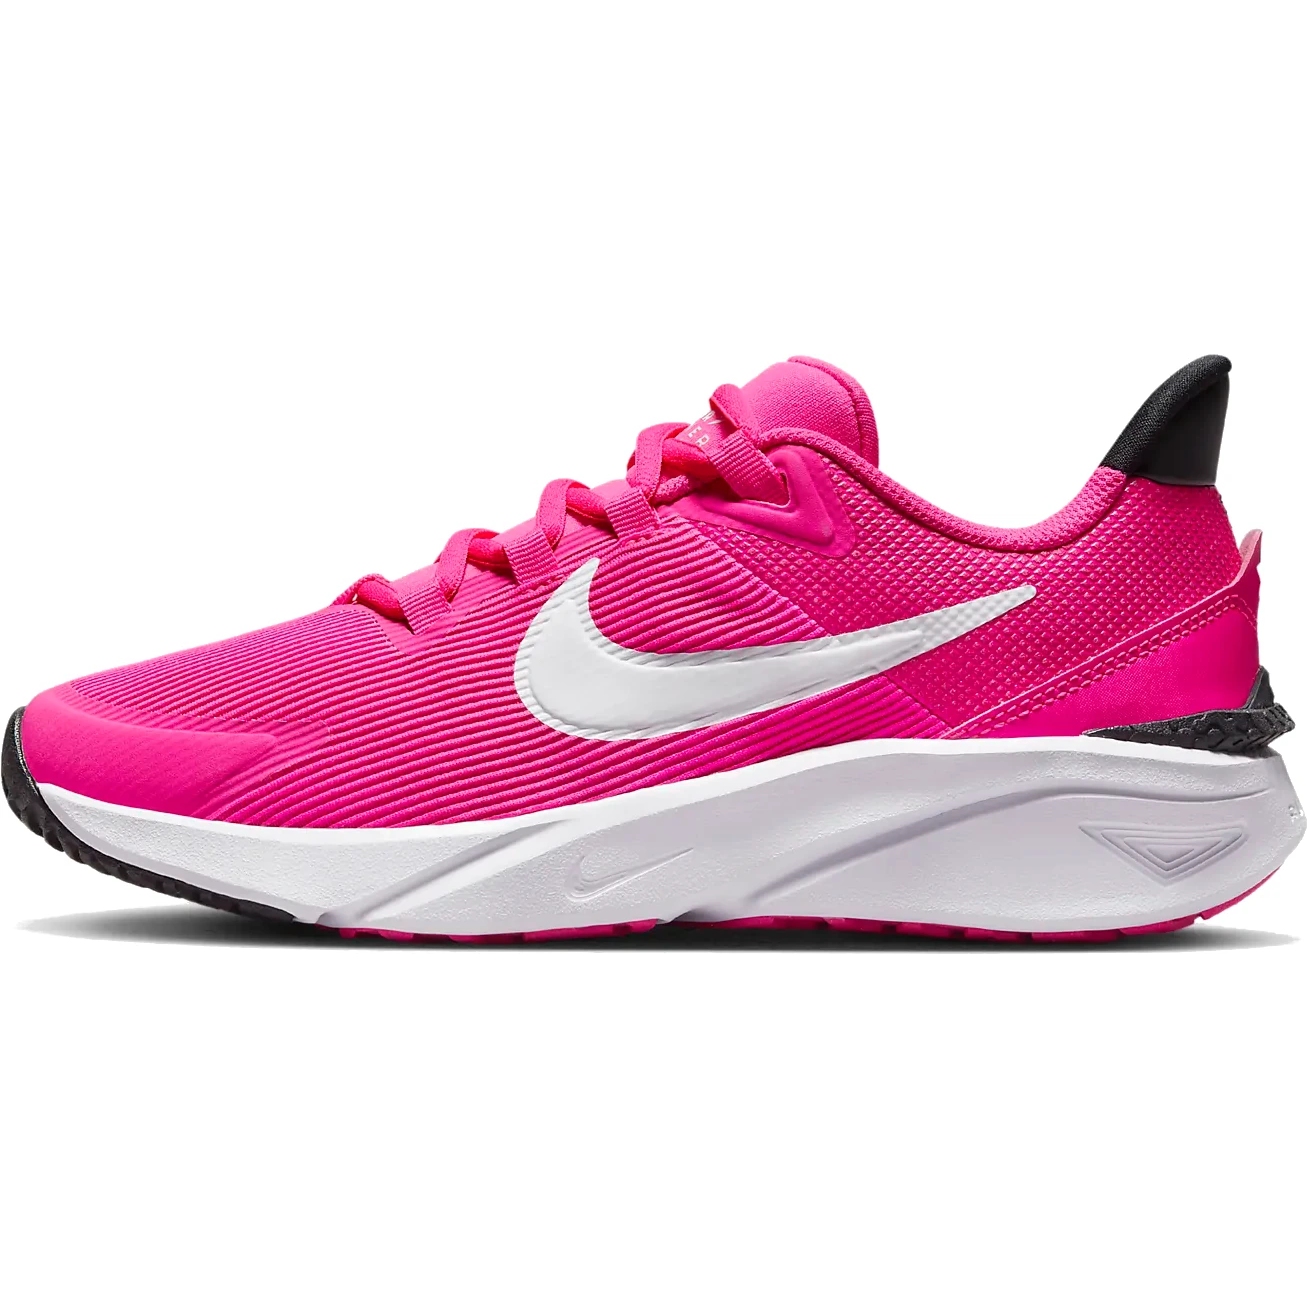 Immagine di Nike Scarpe Bambini - Star Runner 4 - fierce pink/black-white DX7615-601